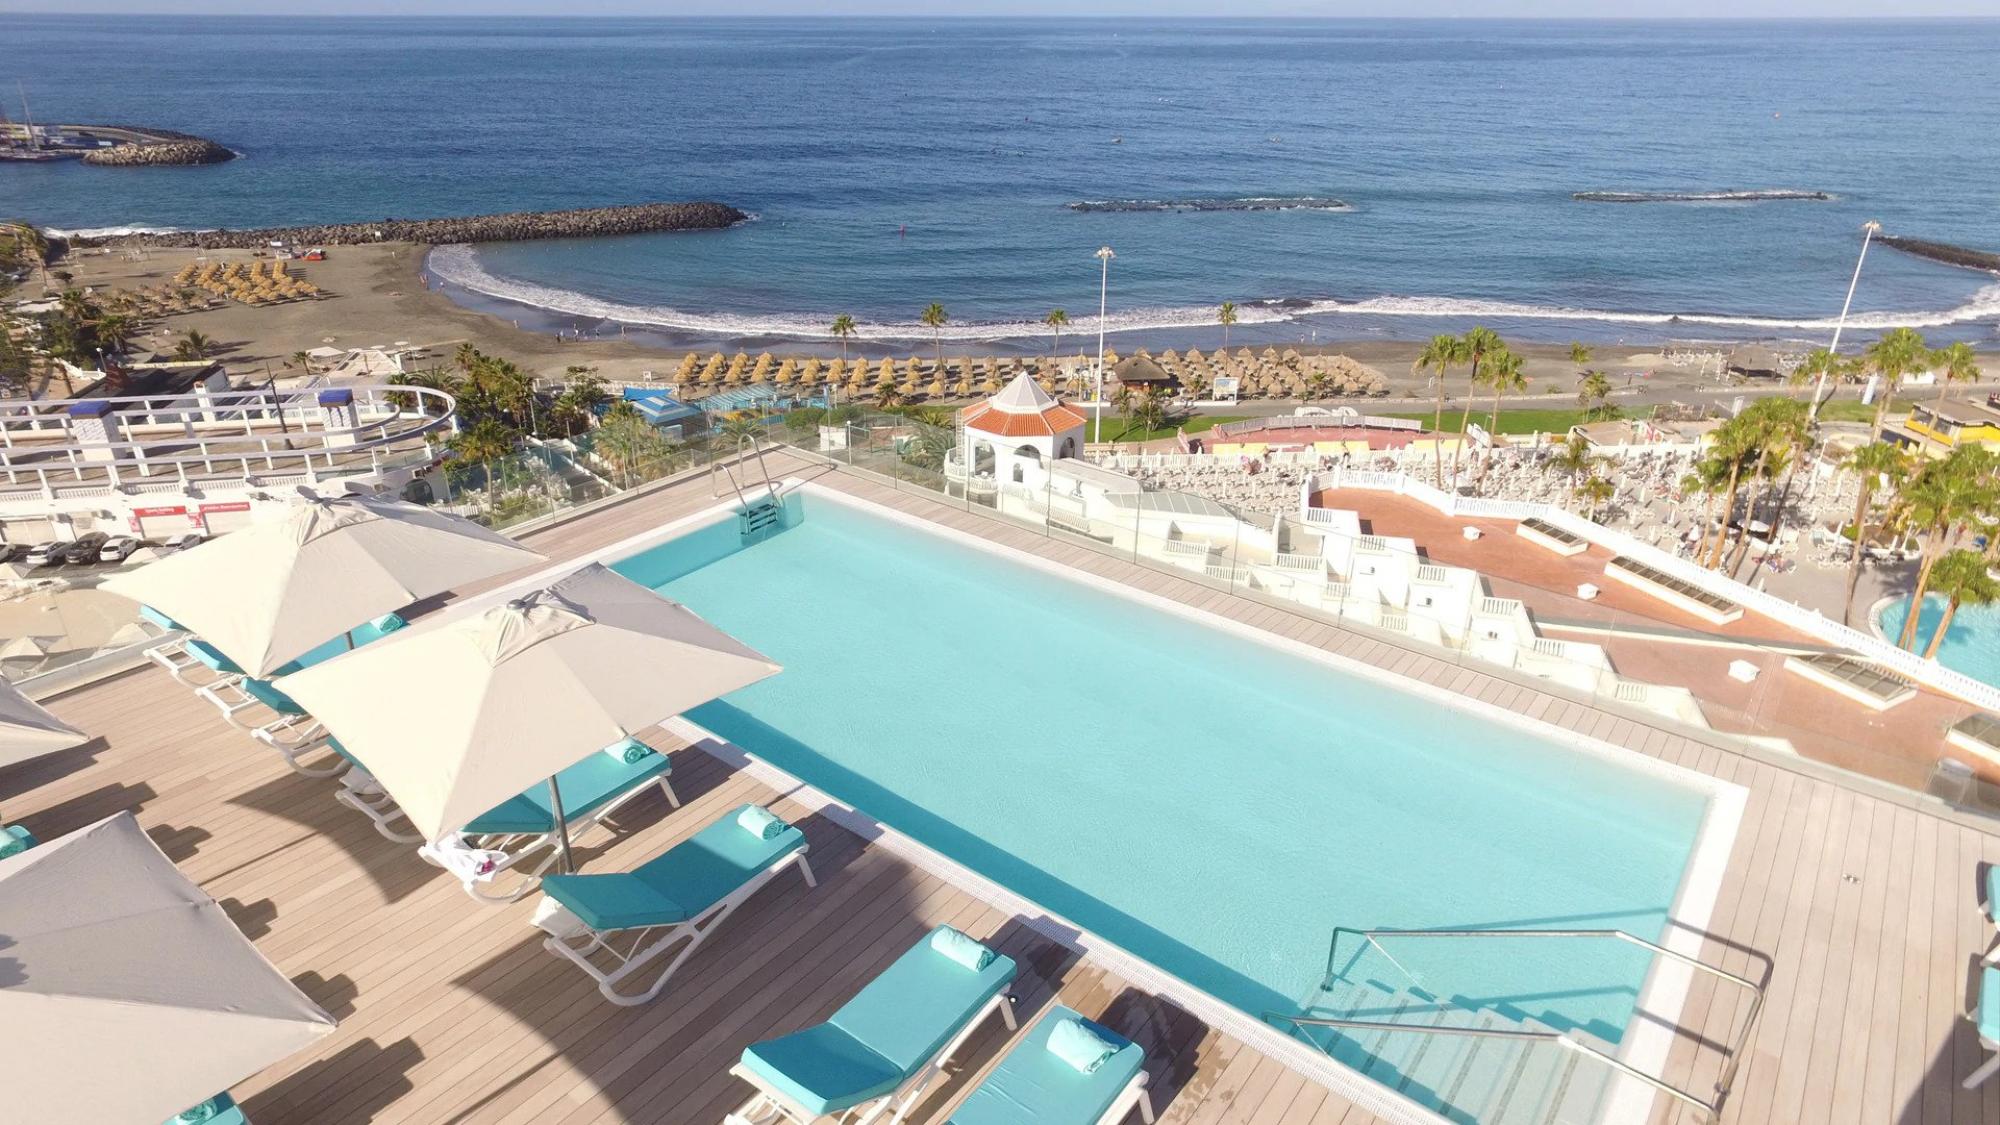 The Iberostar Selection Sabila's scenic outdoor pool in spectacular Tenerife.